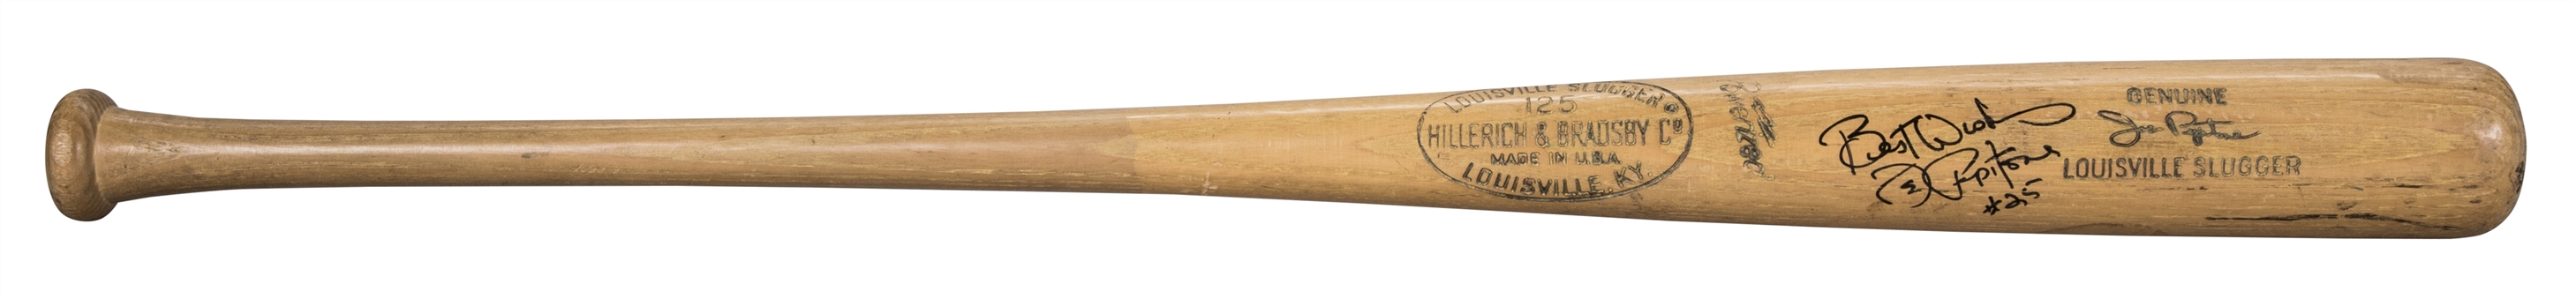 1966-68 Joe Pepitone Game Used, Signed & Inscribed Hillerich & Bradsby P104 Model Bat (PSA/DNA GU 8)